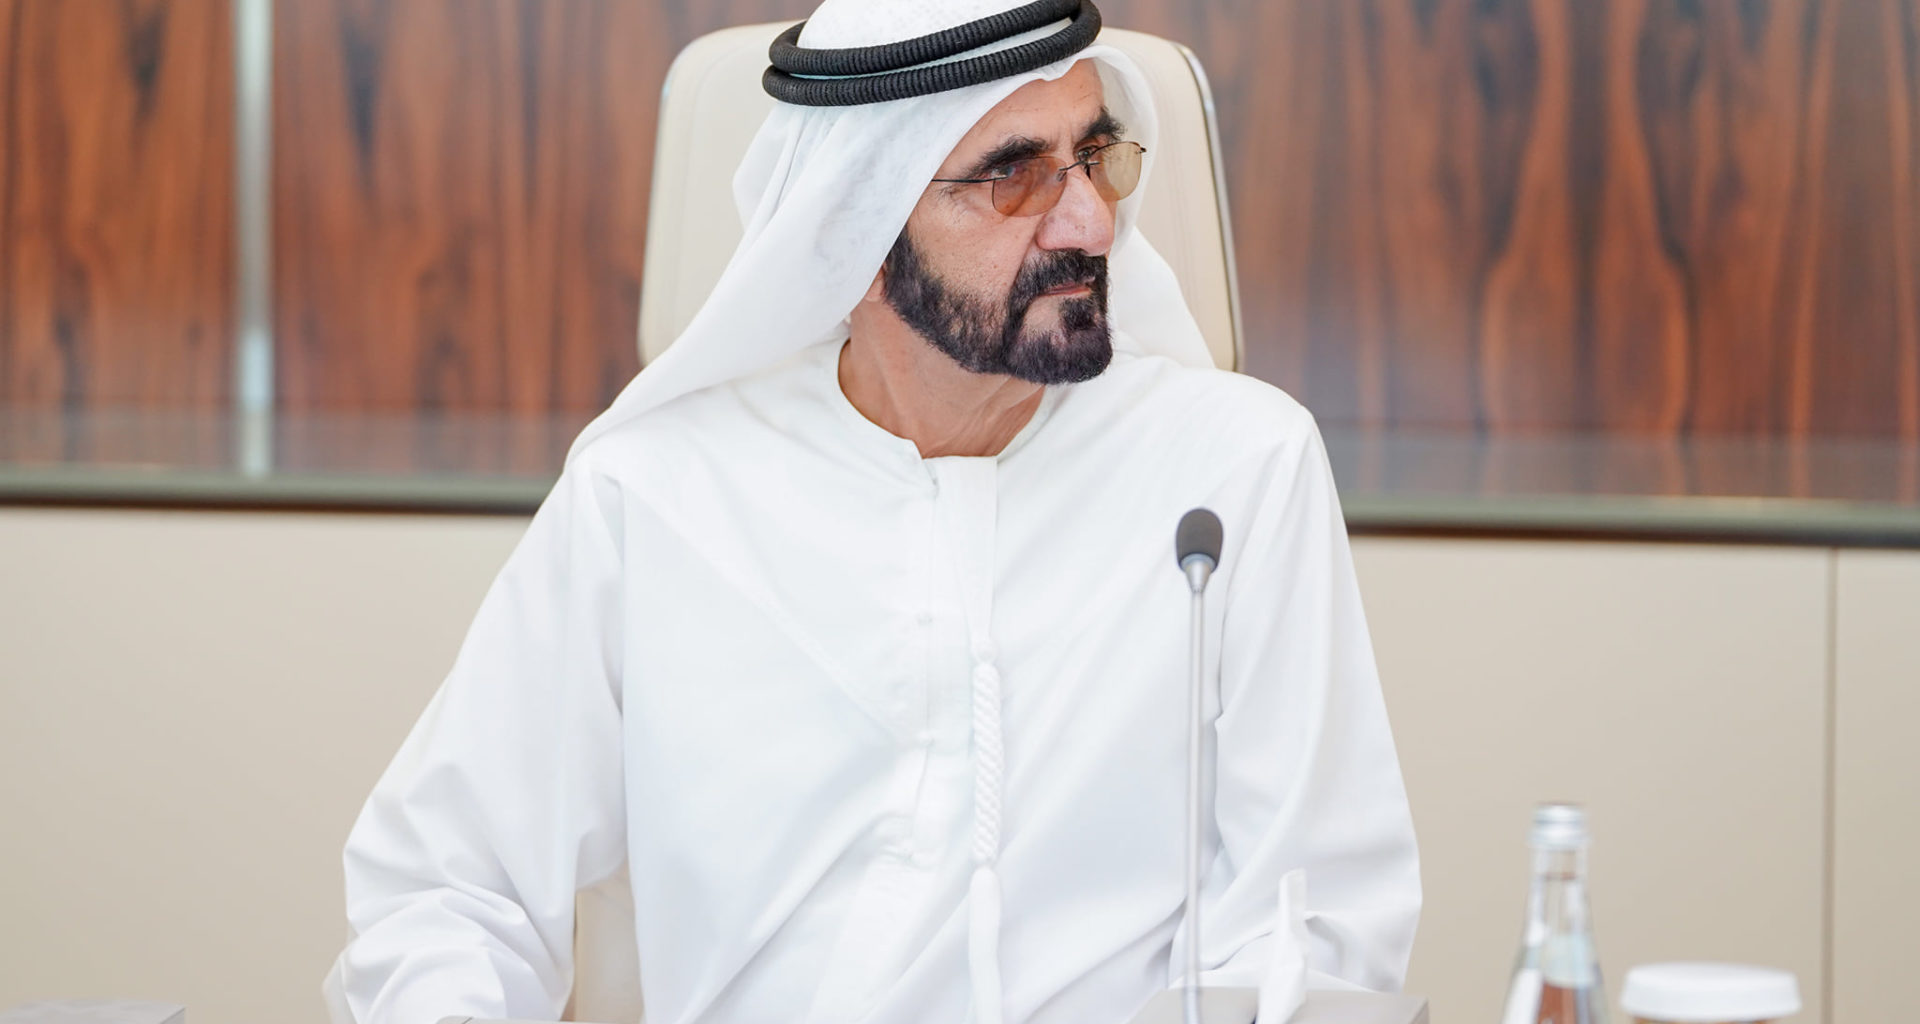 Dubai Doctors Granted 10-year Golden Visa by Sheikh Mohammed bin Rashid